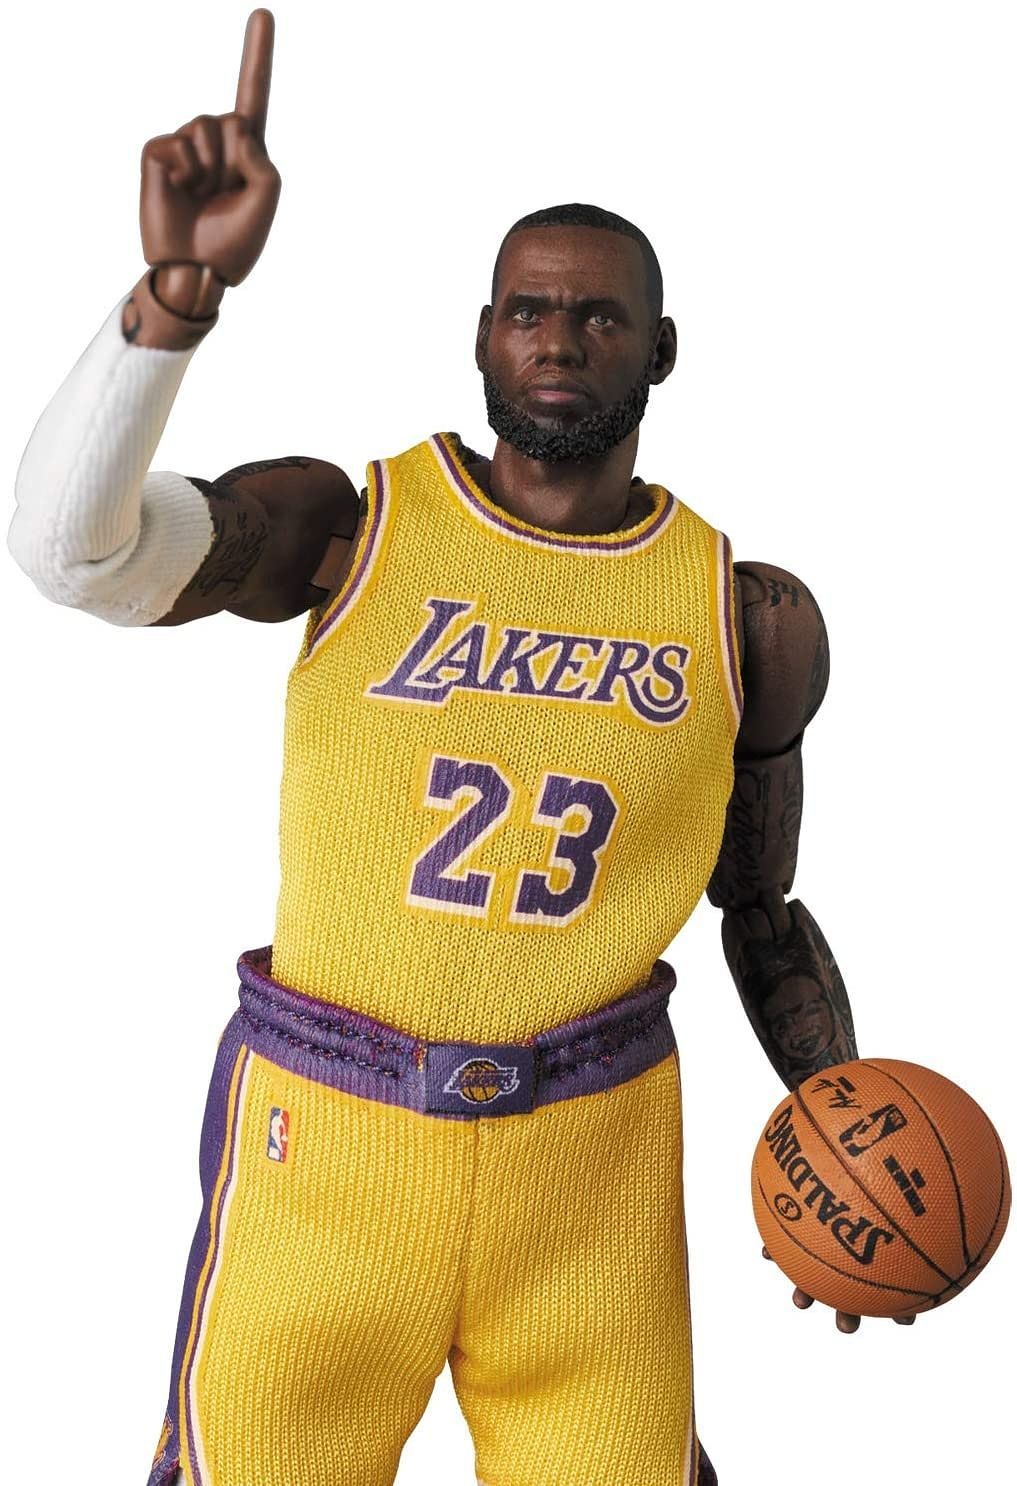 Medicom - MAFEX No. 127 - NBA - Los Angelas Lakers - LeBron James - Marvelous Toys